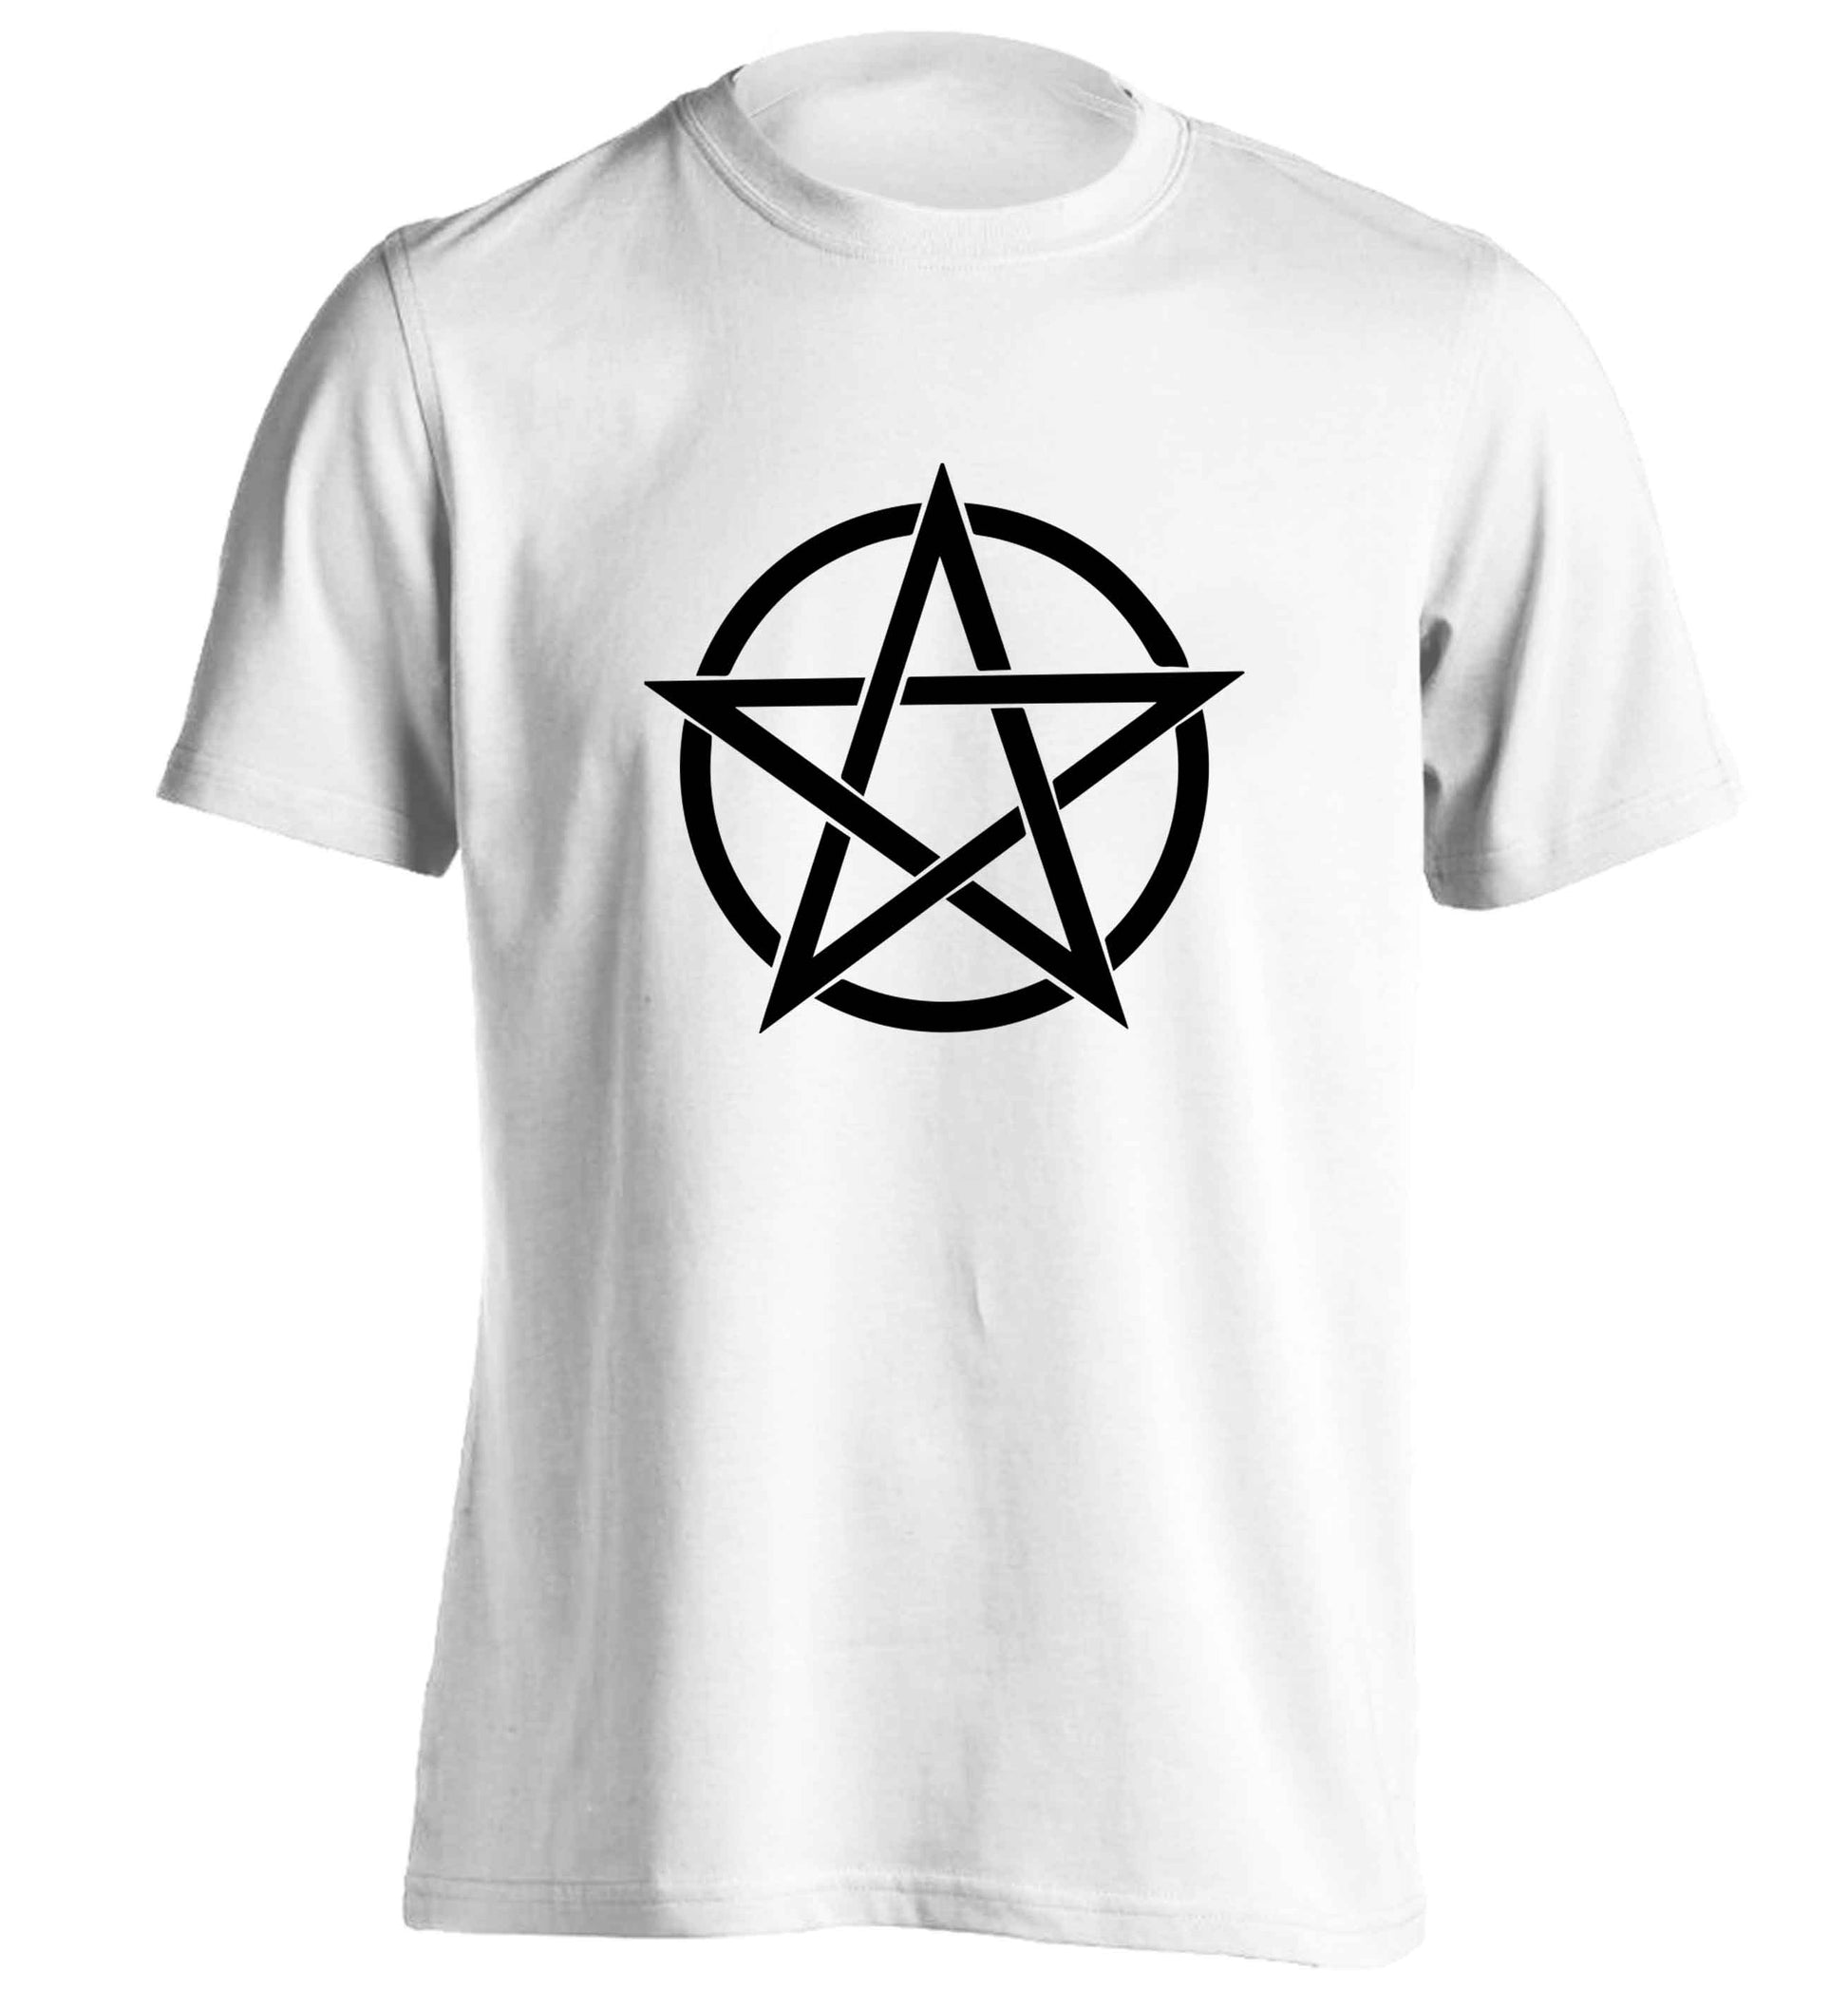 Pentagram symbol adults unisex white Tshirt 2XL